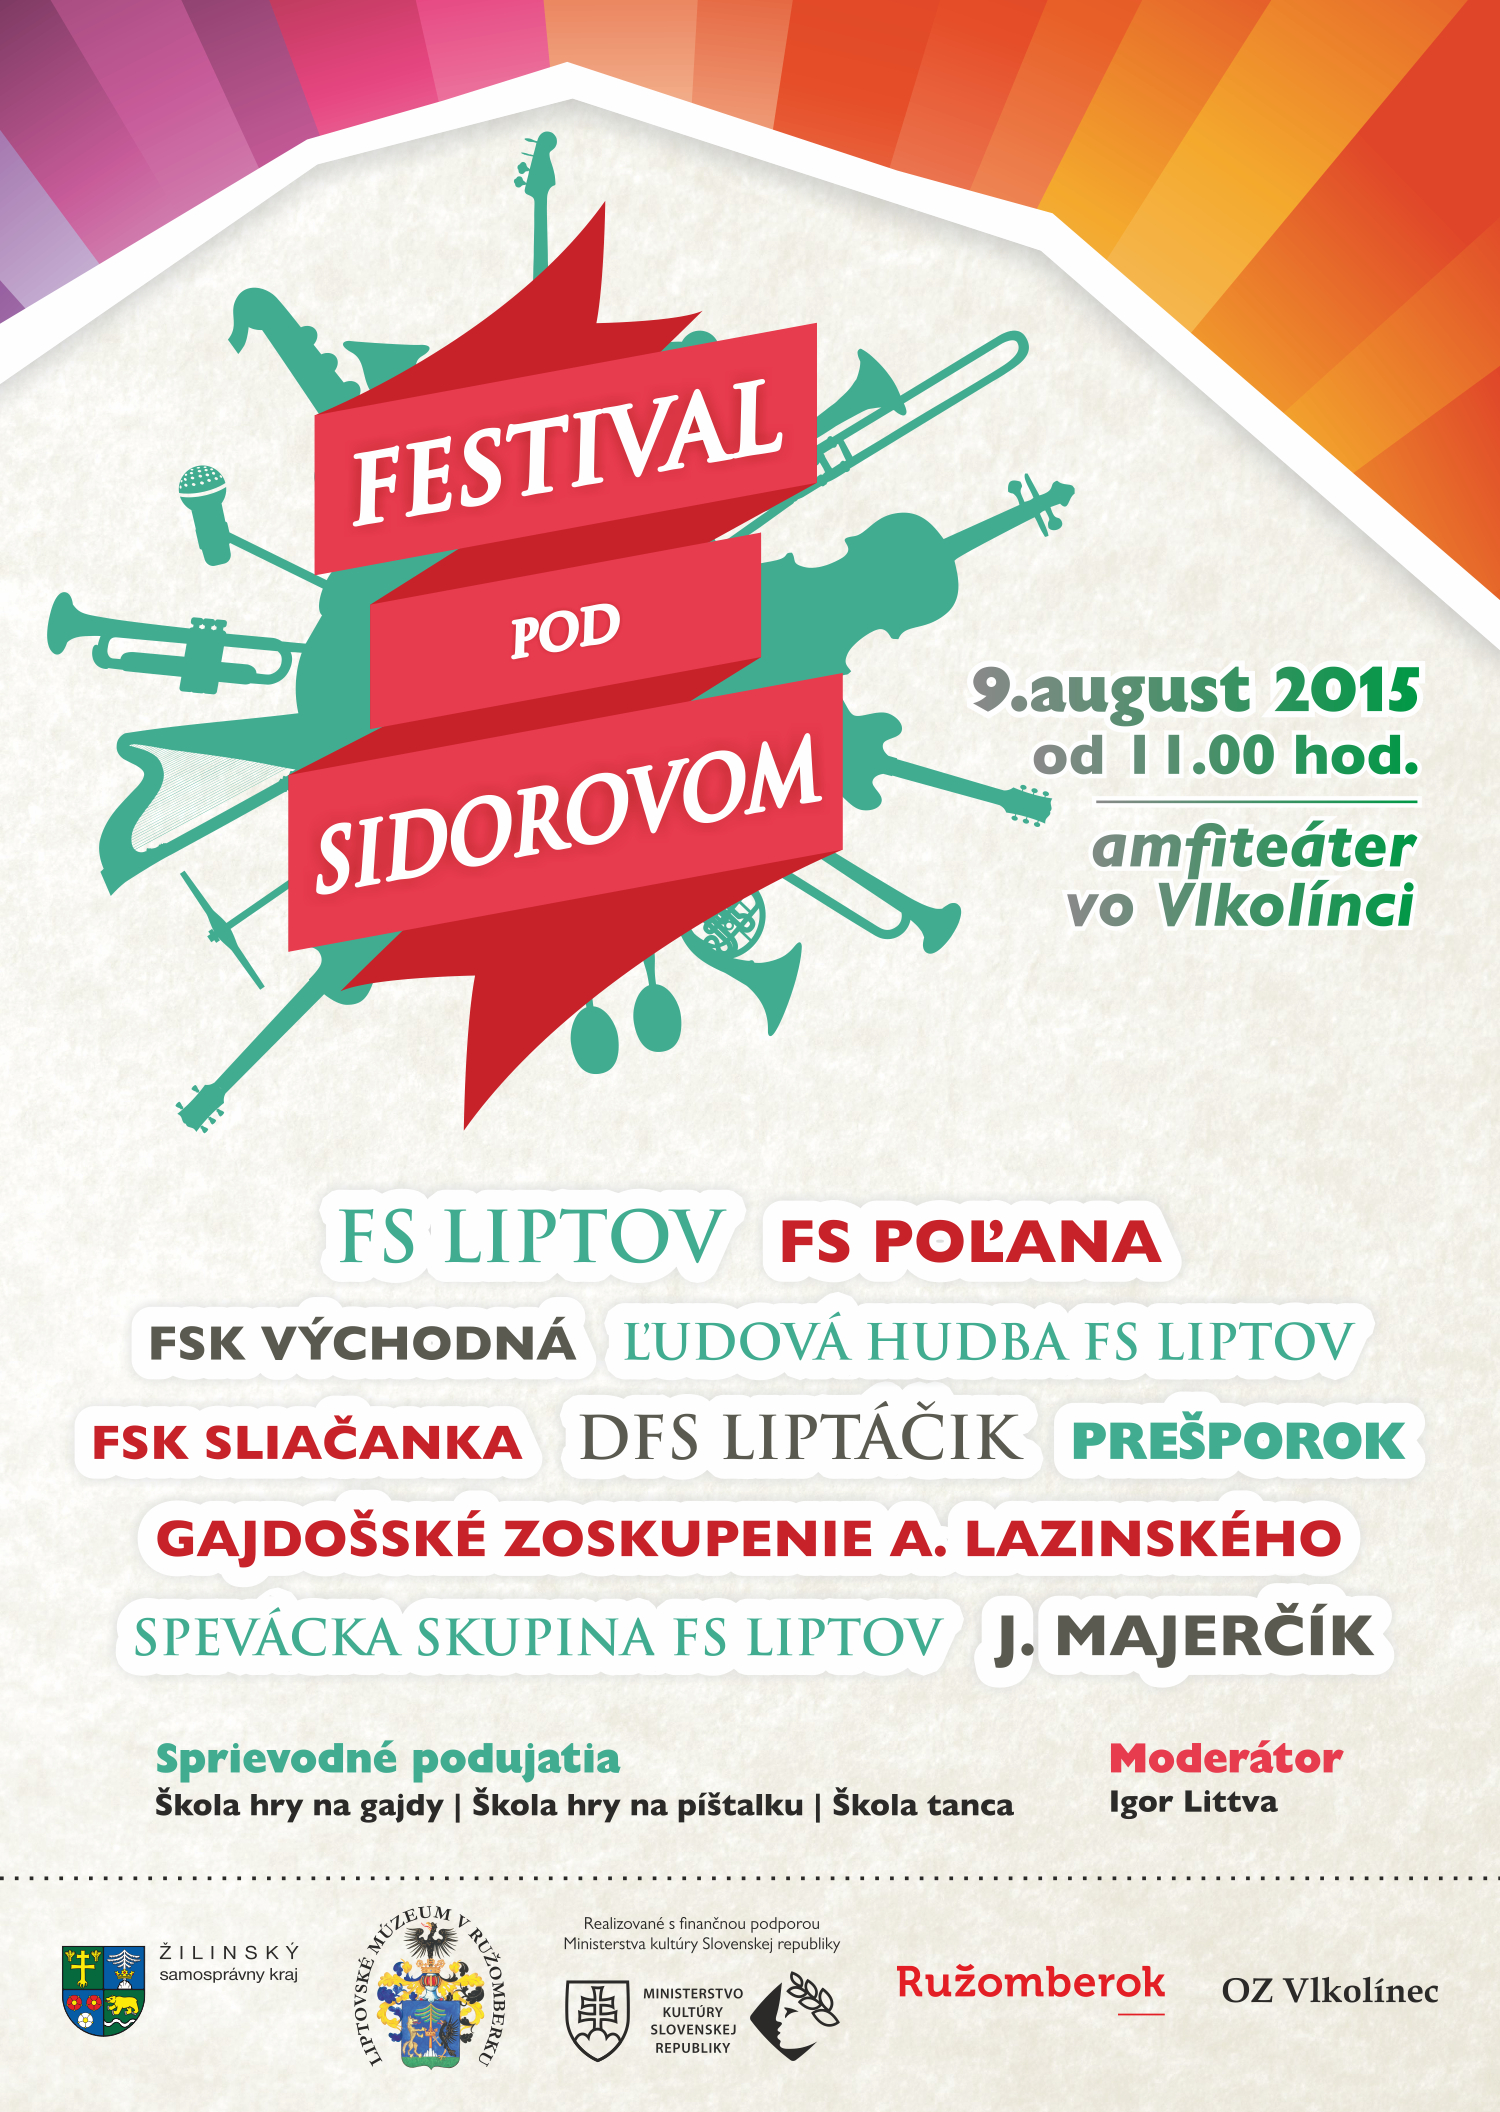 Festival pod Sidorovom 2015 - 2. ronk